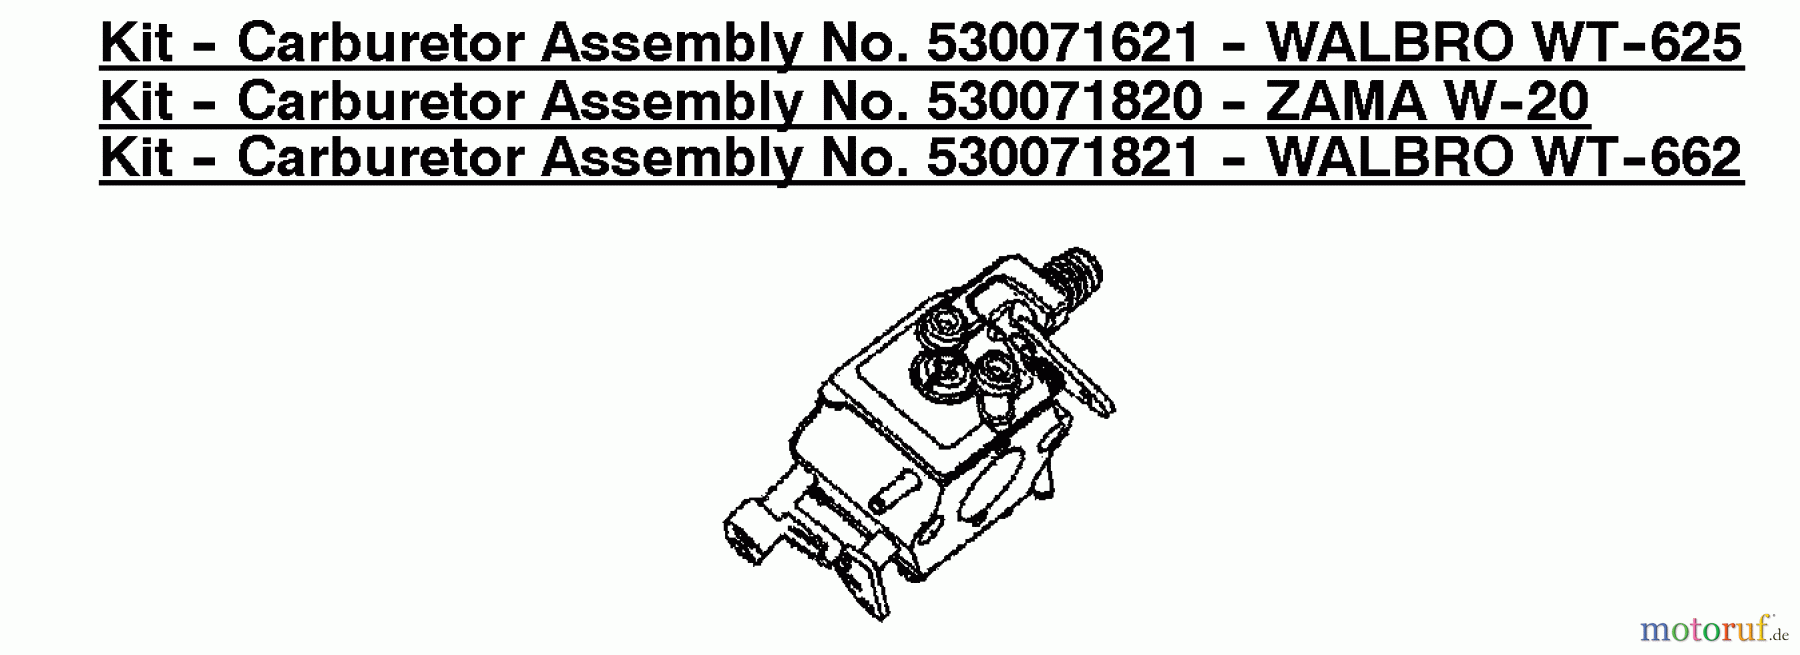  Poulan / Weed Eater Motorsägen PP260 (Type 6) - Poulan Pro Chainsaw Kit - Carburetor Assembly